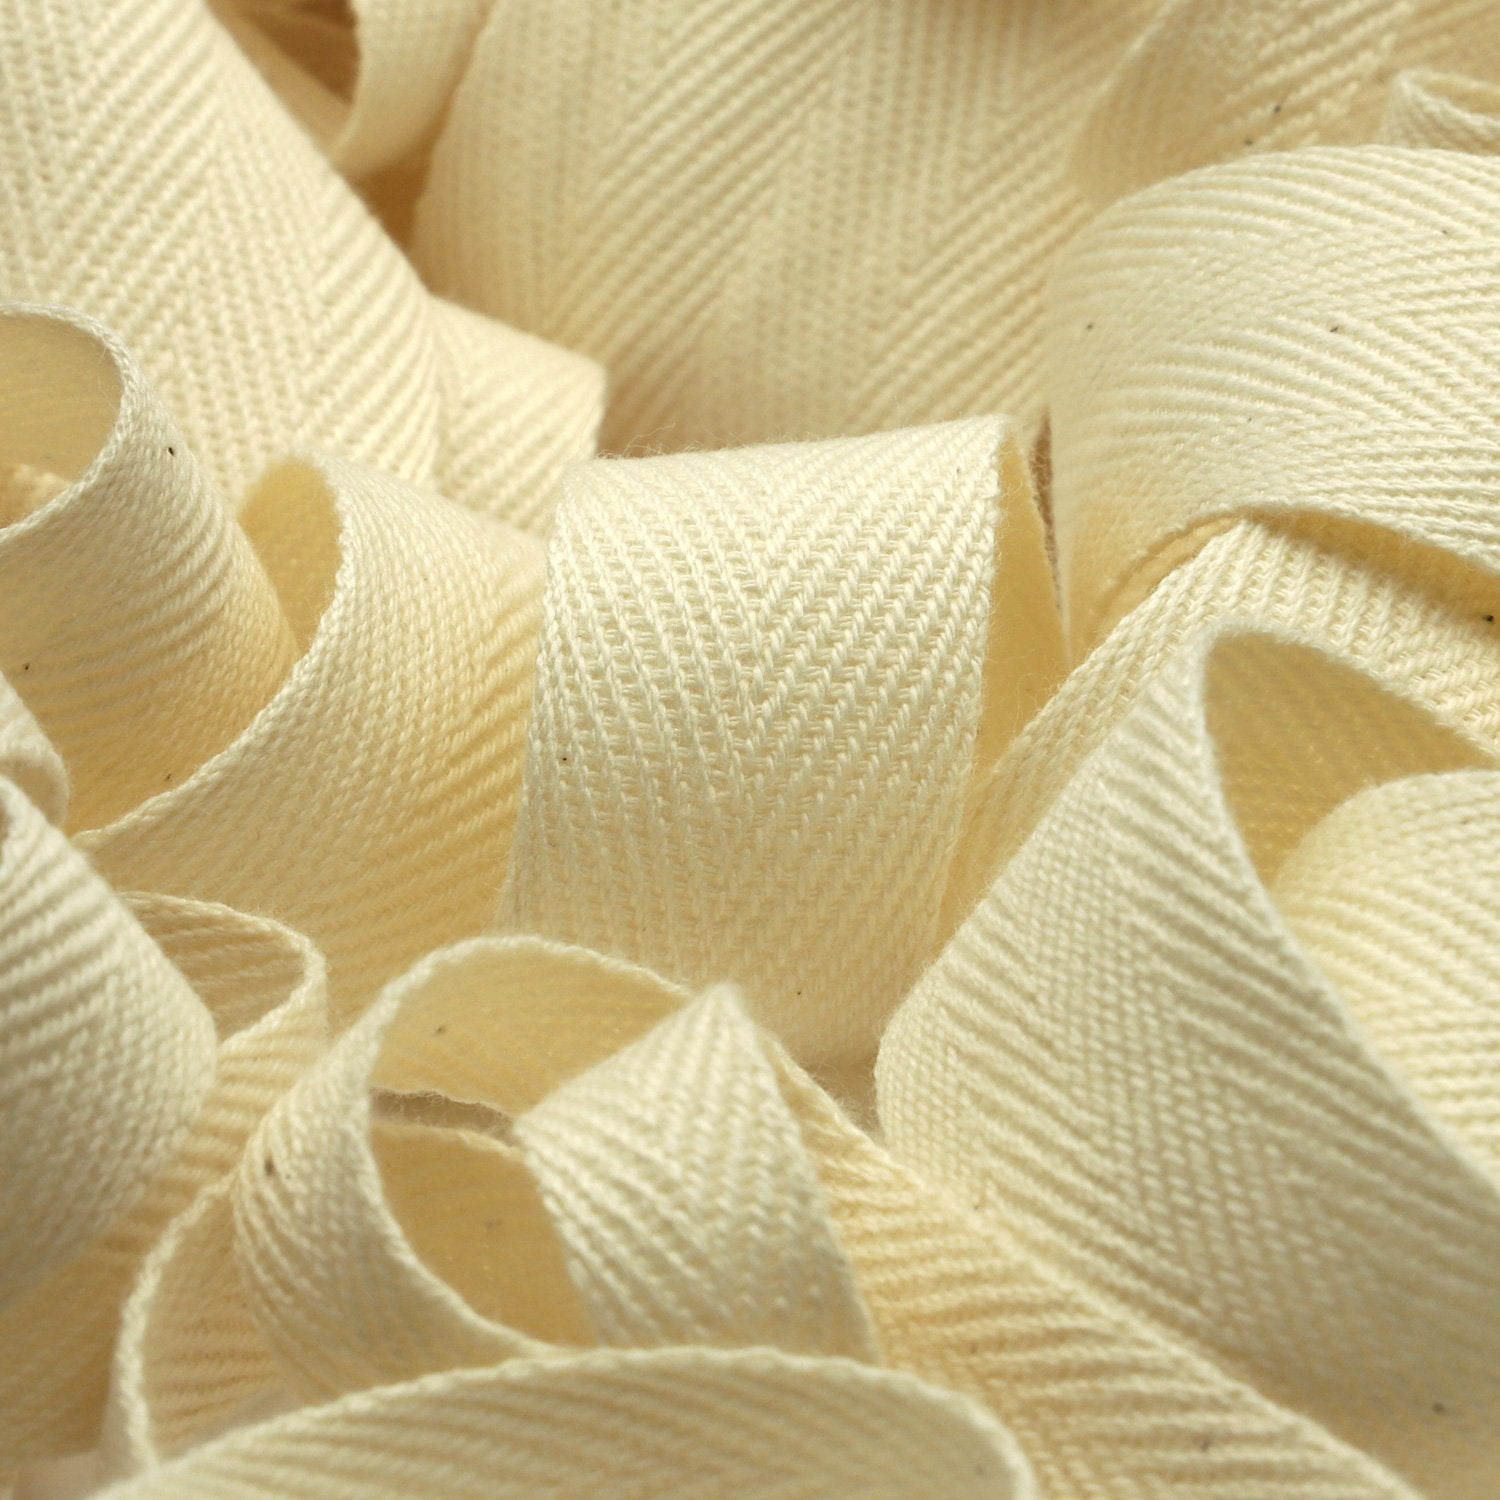 FUJIYAMA RIBBON Organic Cotton Herringbone Ribbon 10mm Ecru 9.14 Meters Roll